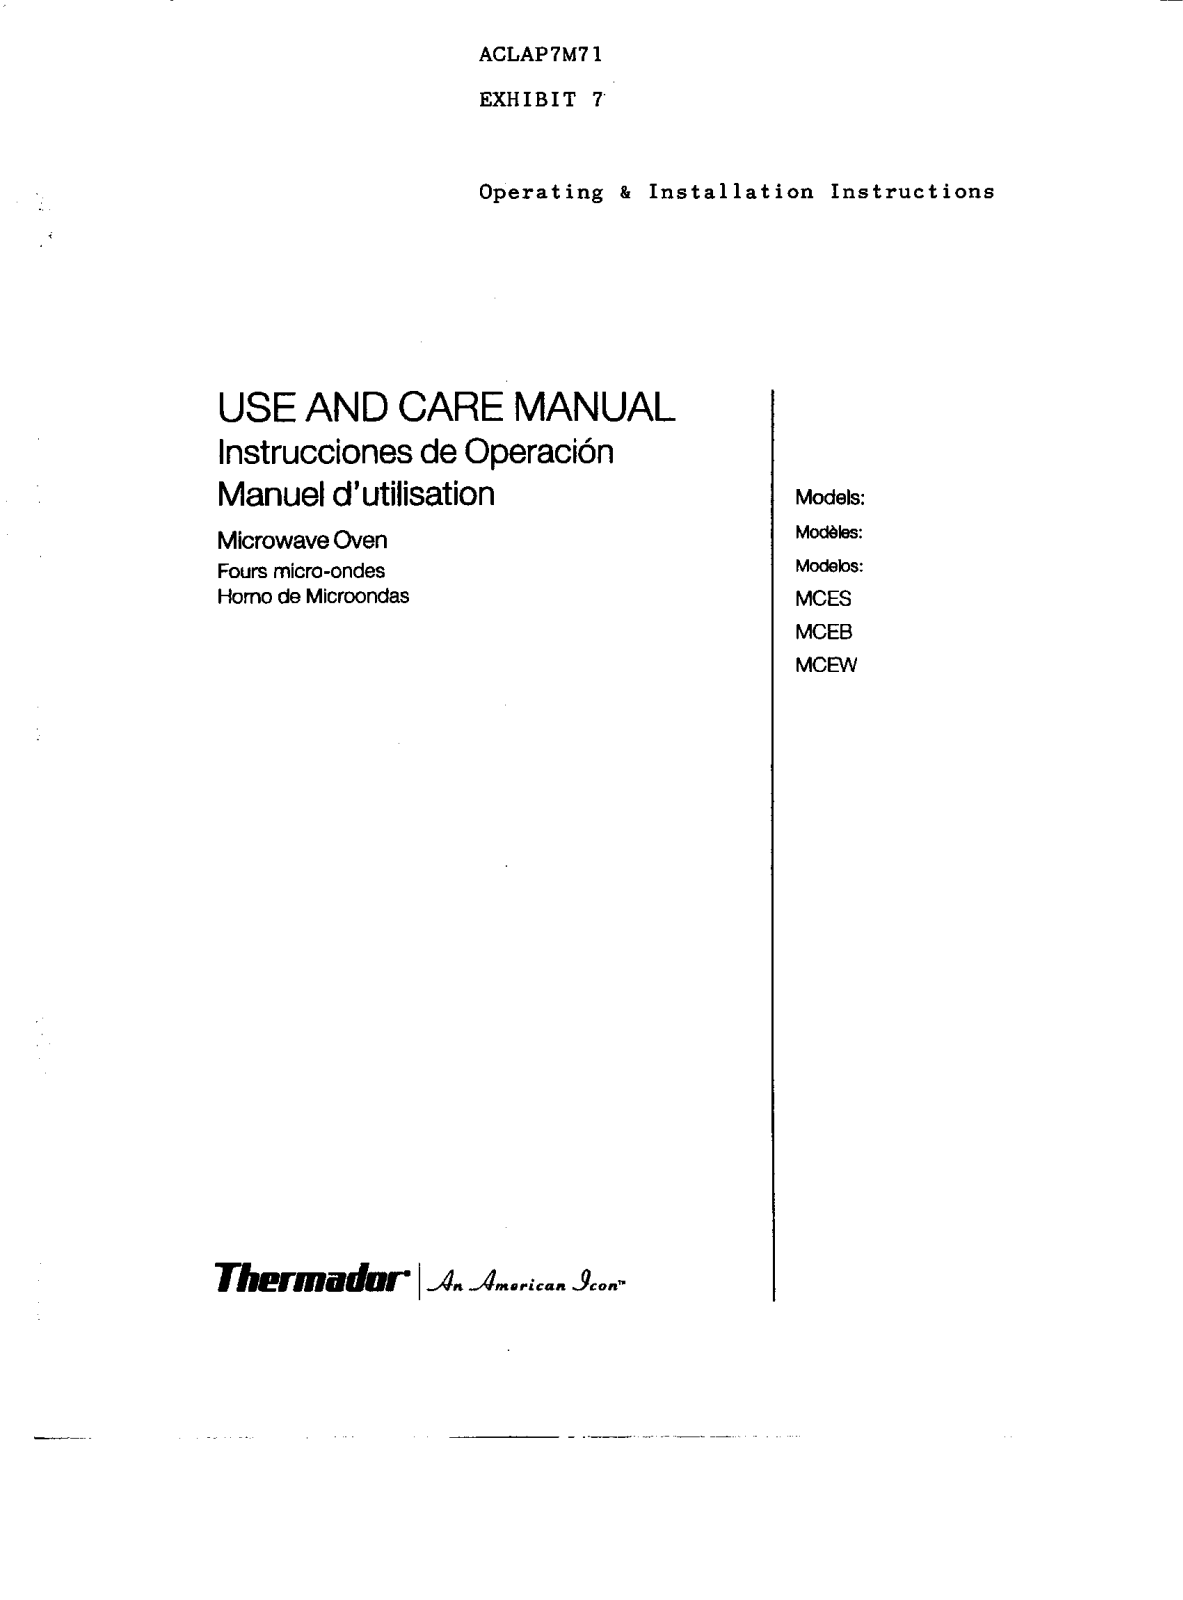 Panasonic AP7M71 Users Manual